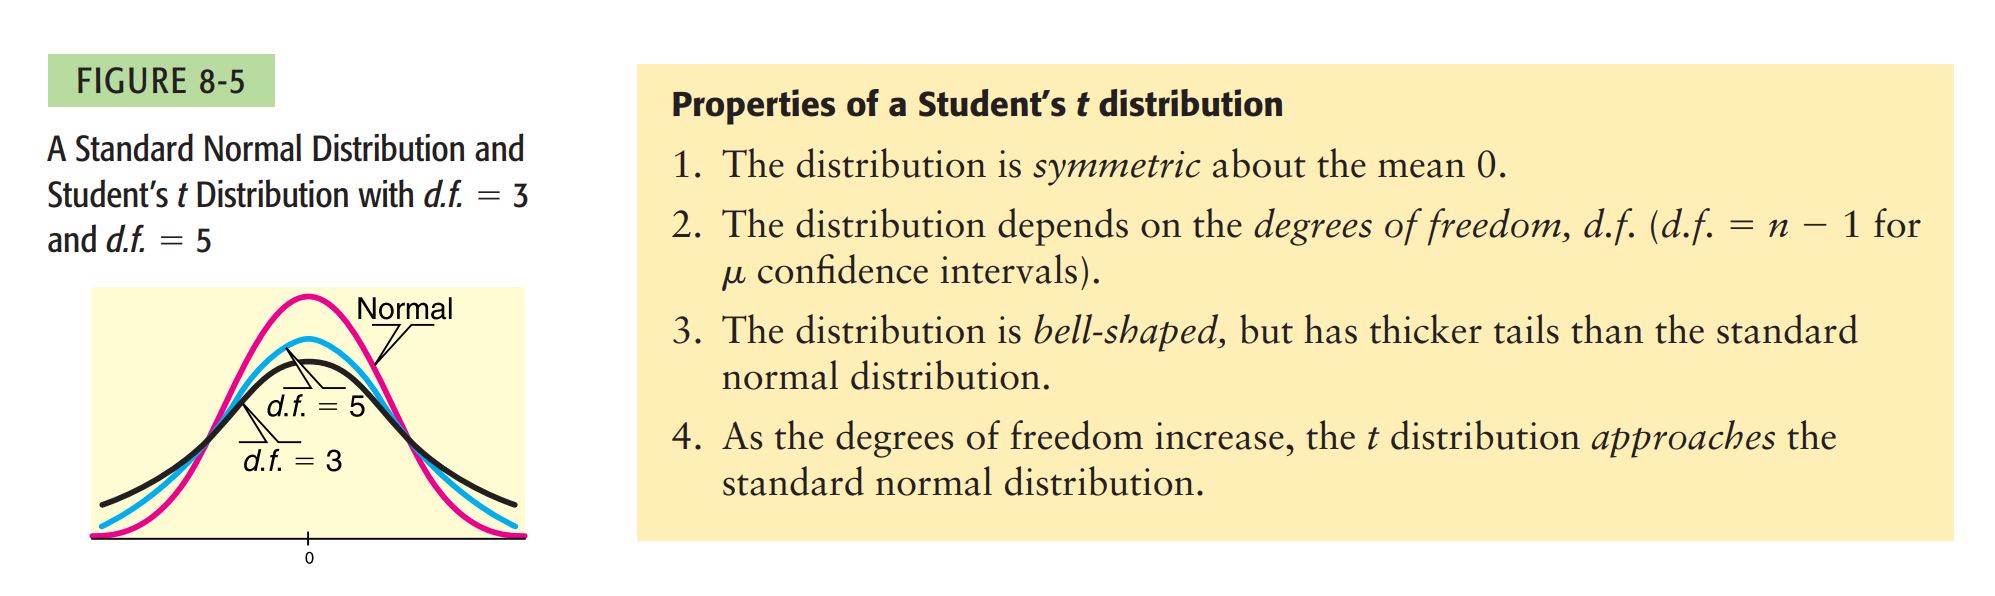 t distribution's properties